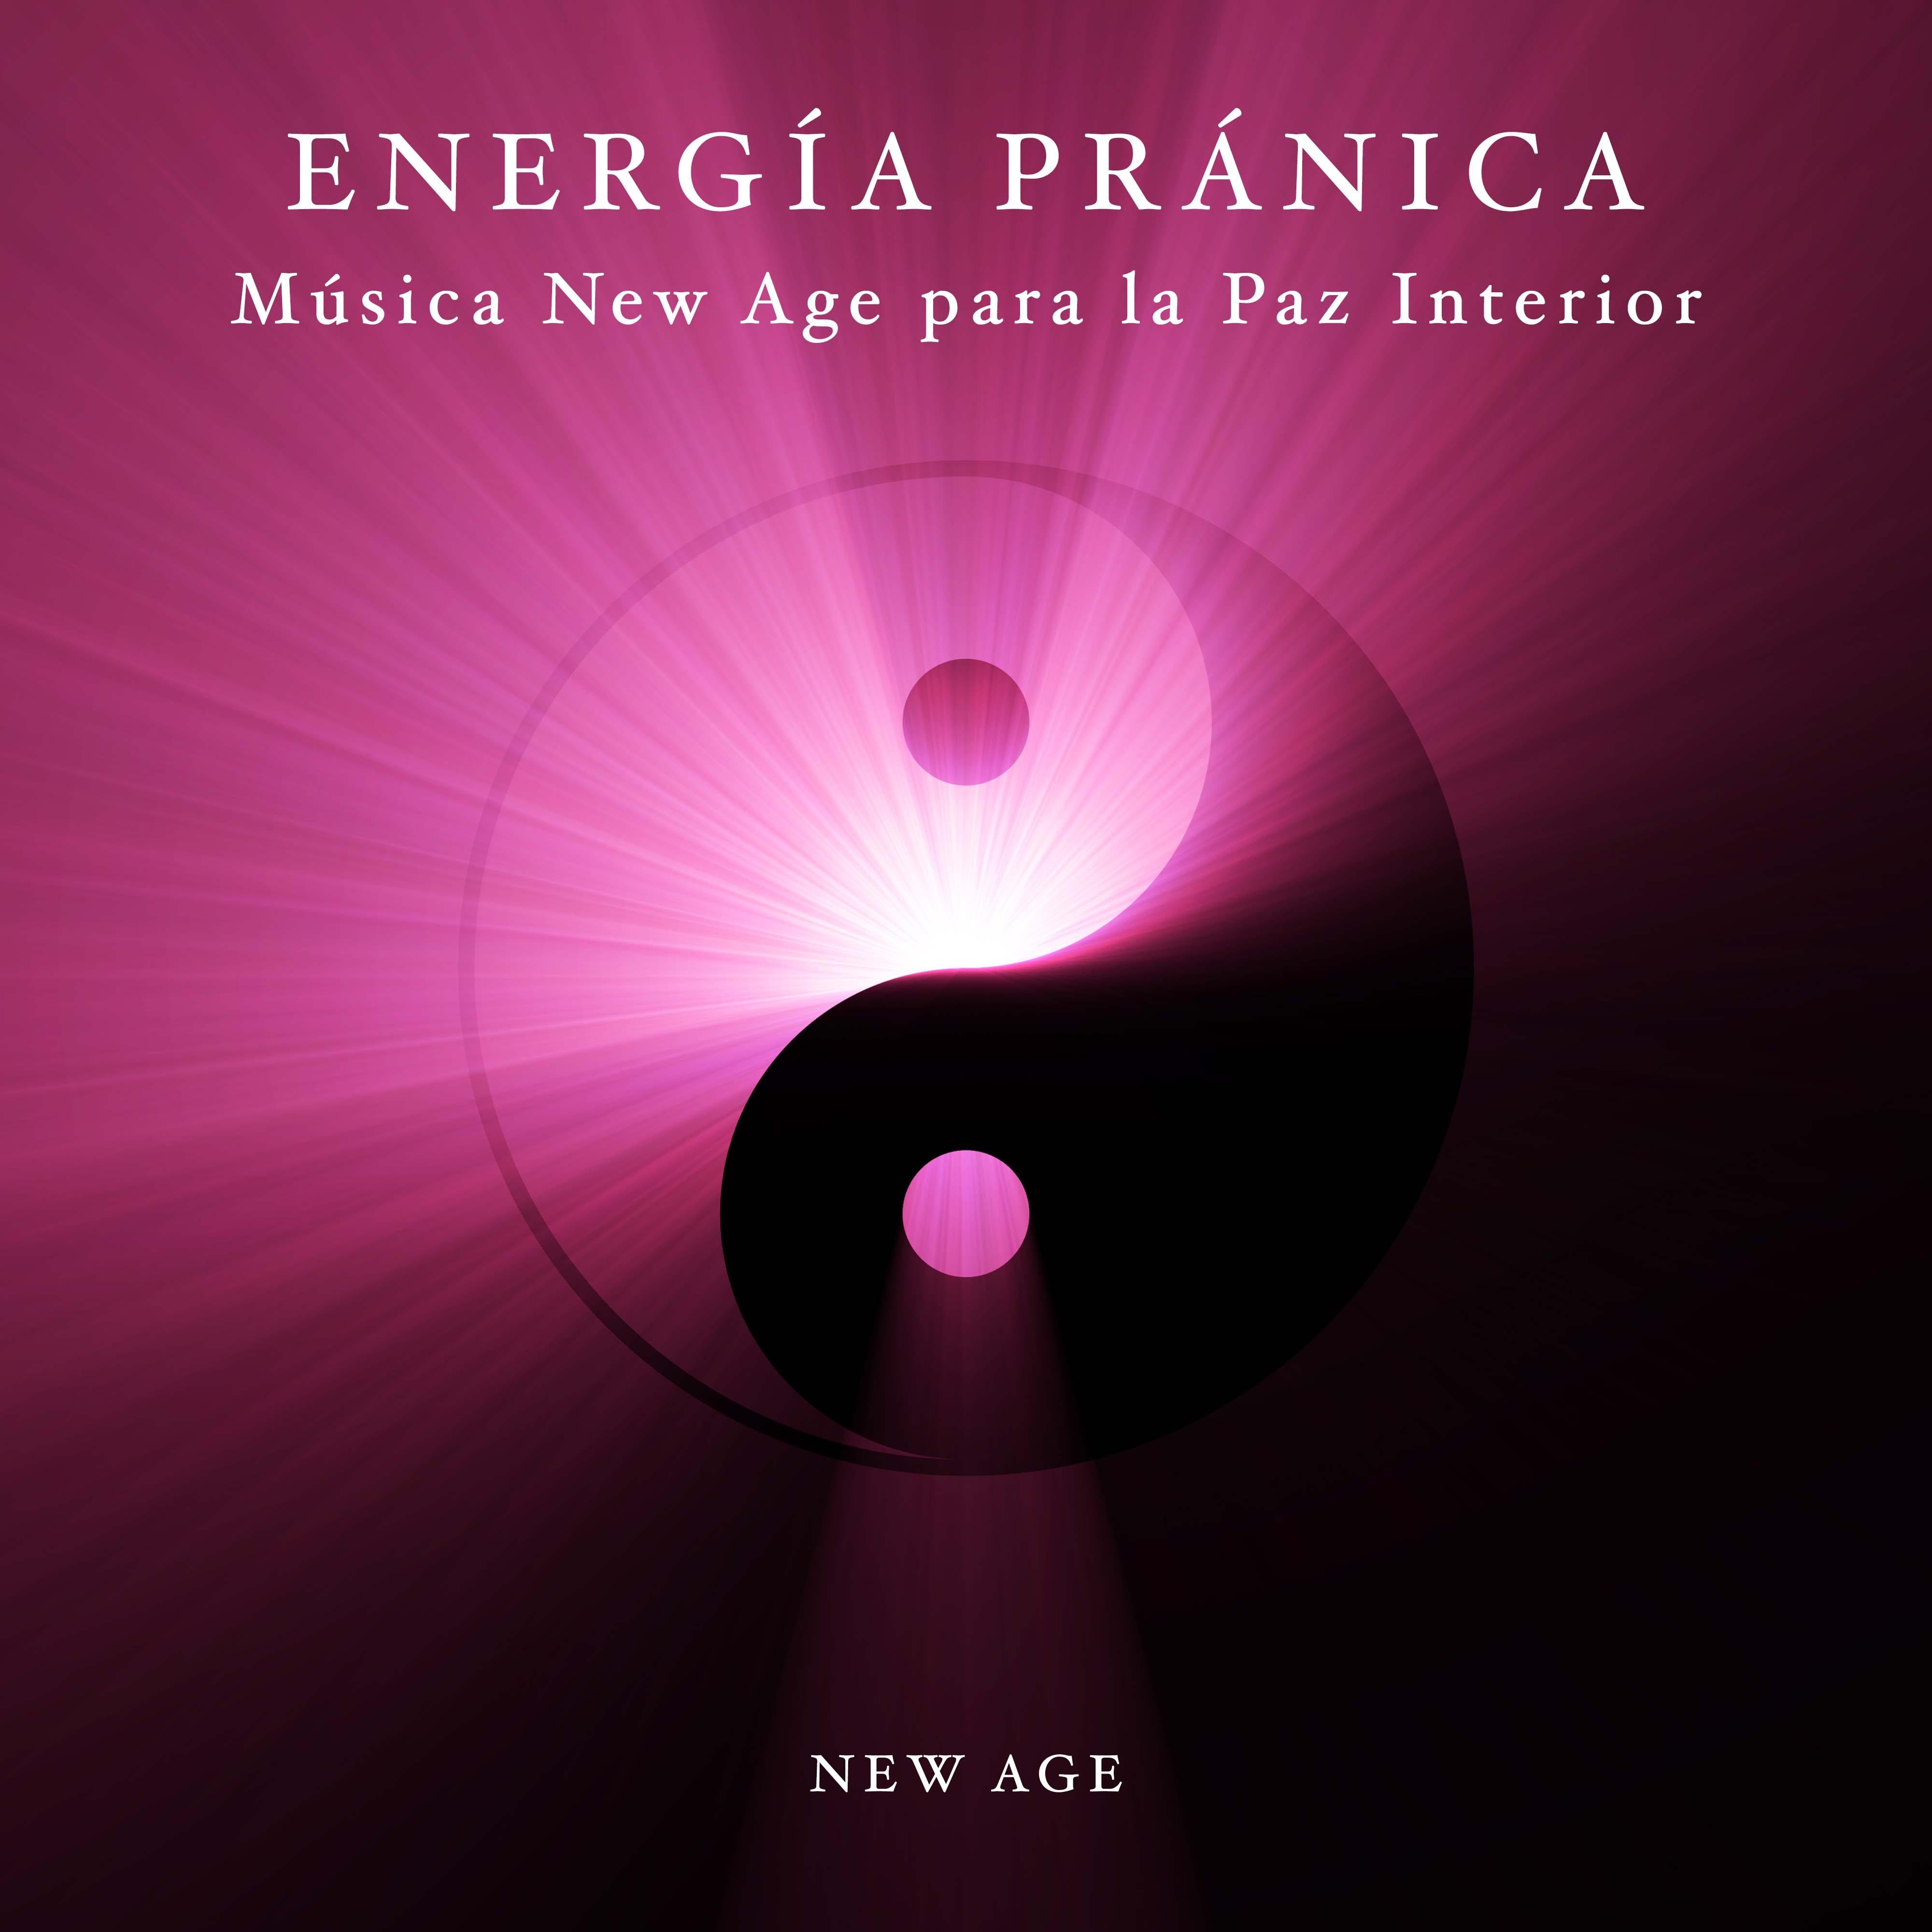 Energi a Pra nica: Musica New Age para la Paz Interior